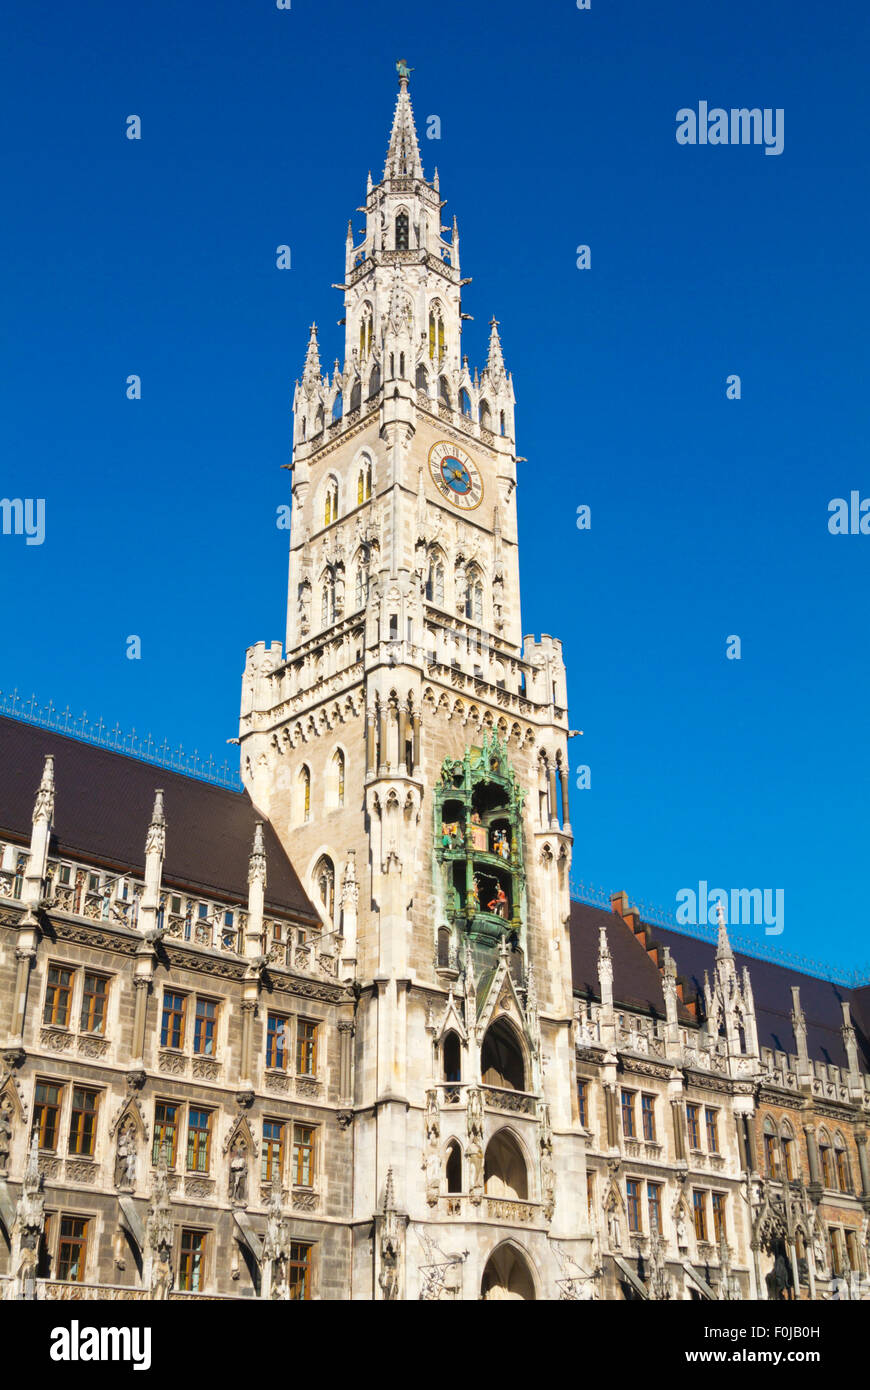 Tower of Neues Rathaus, Marienplatz, old town, Munich, Bavaria, Germany Stock Photo